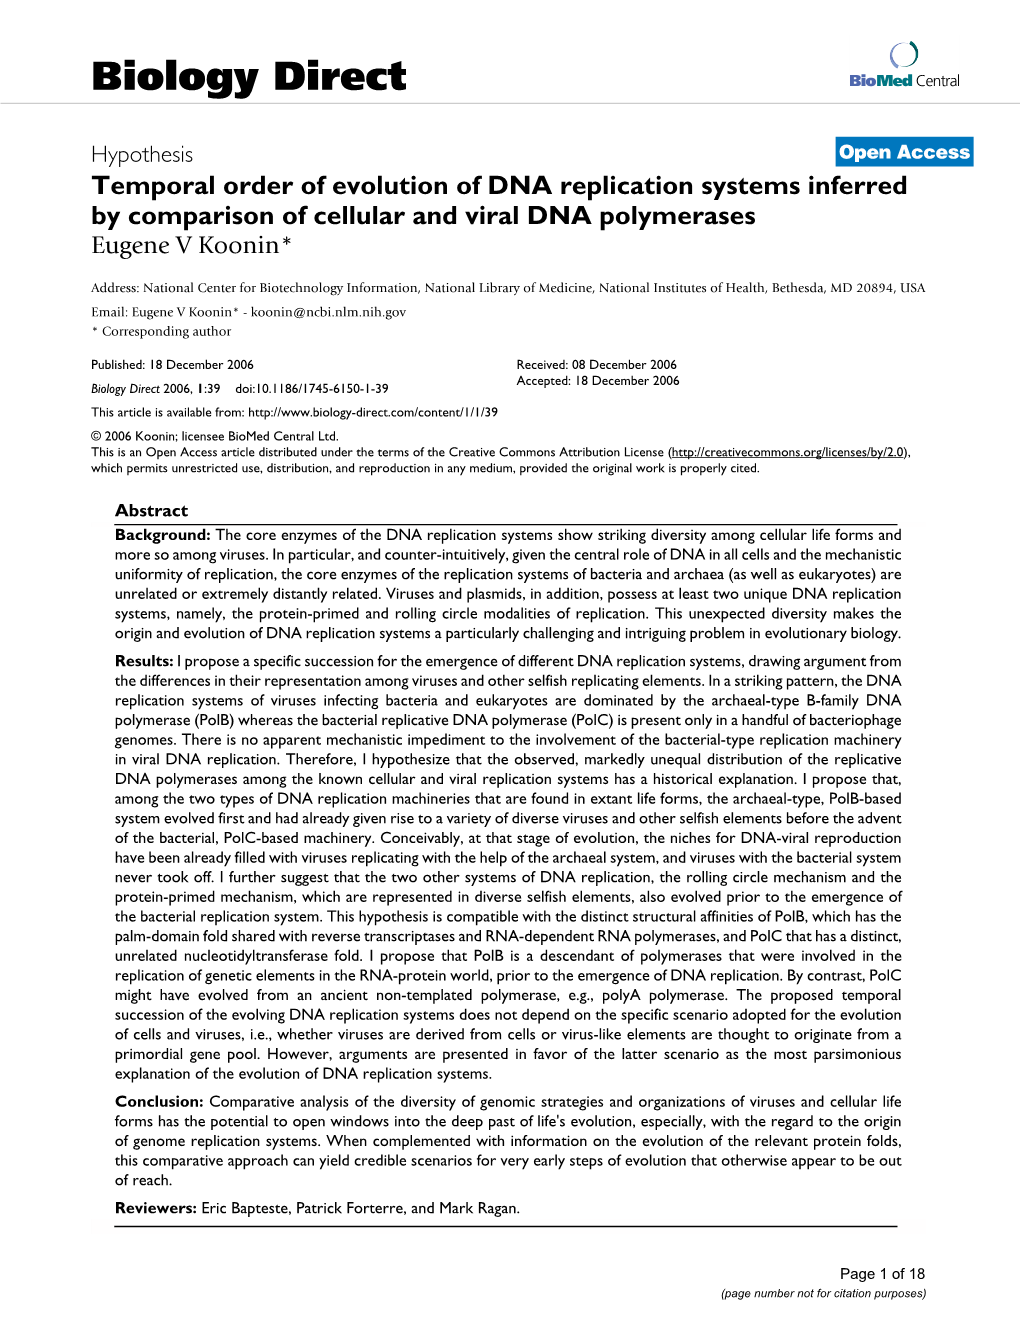 Temporal Order of Evolution of DNA Replication Systems Inferred by Comparison of Cellular and Viral DNA Polymerases Eugene V Koonin*